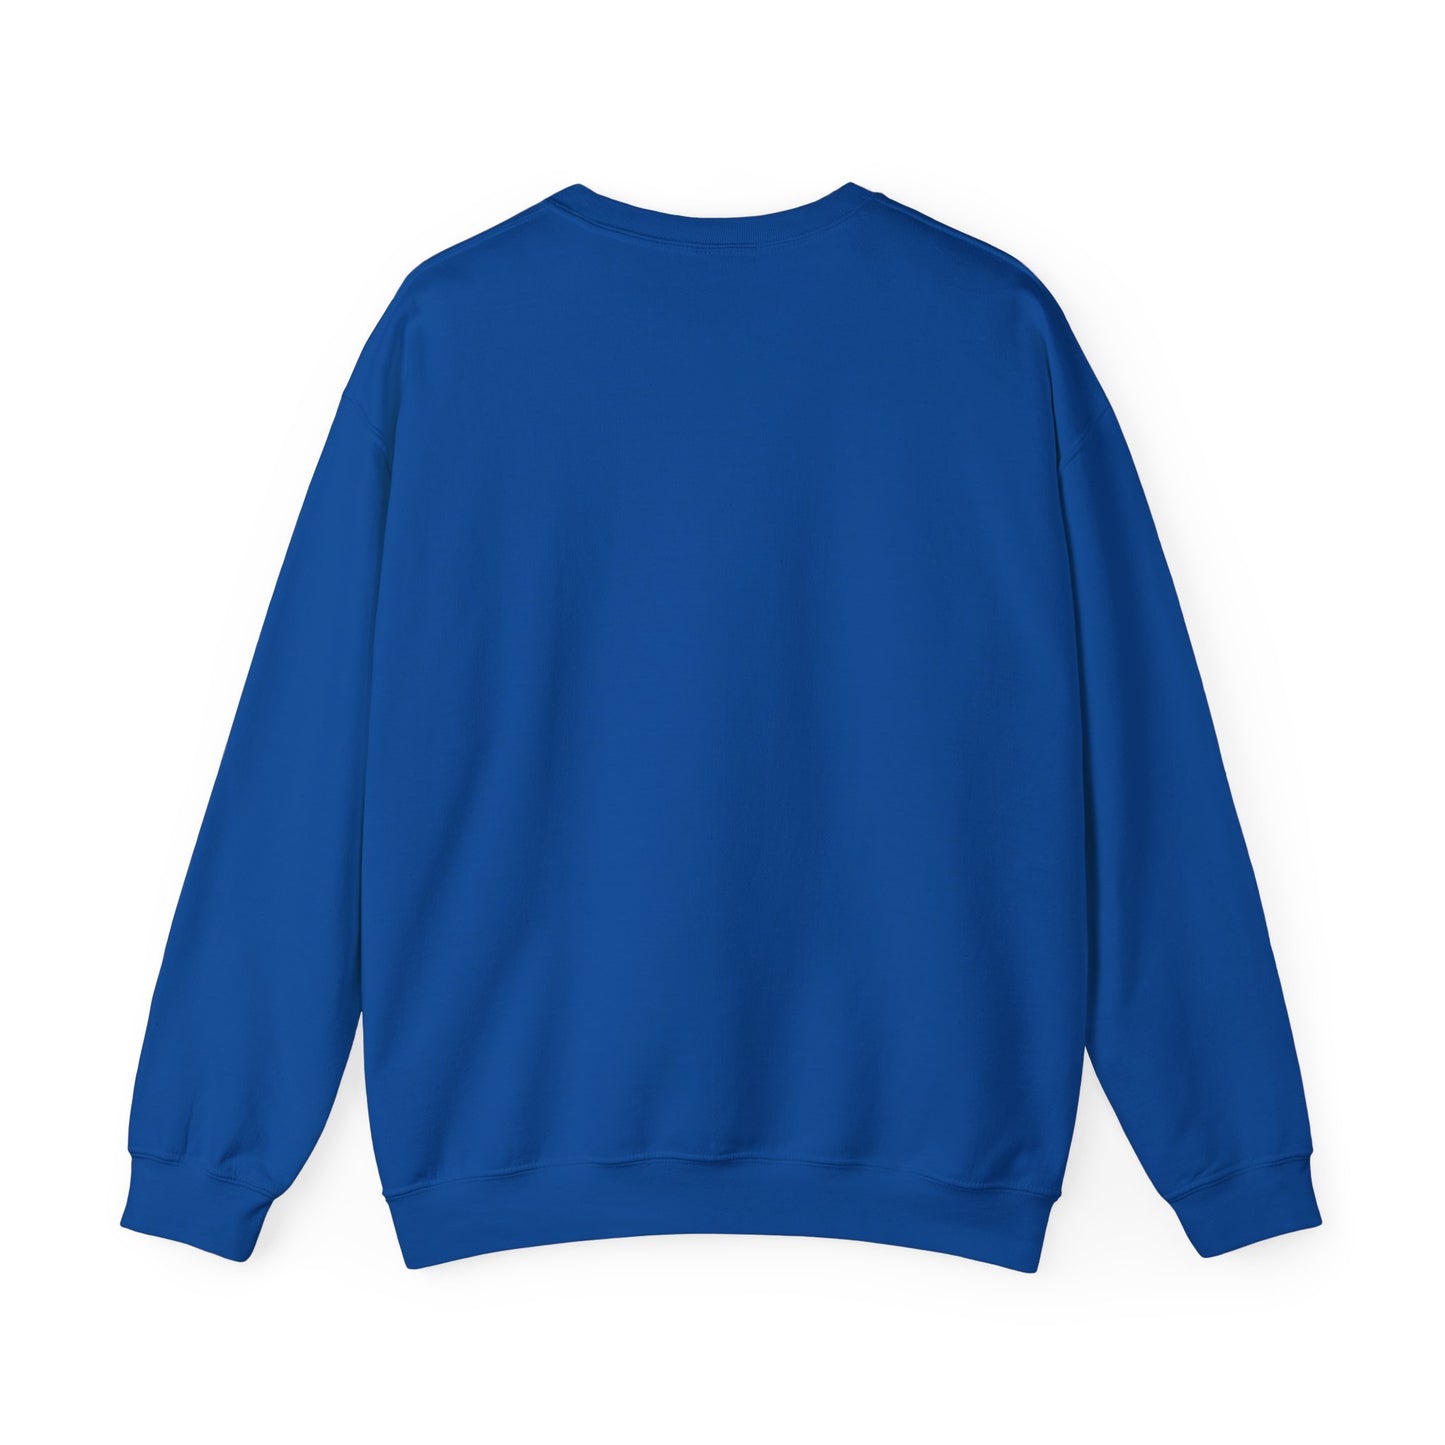 Unisex Graphic design (Self Love) Heavy Blend™ Crewneck Sweatshirt